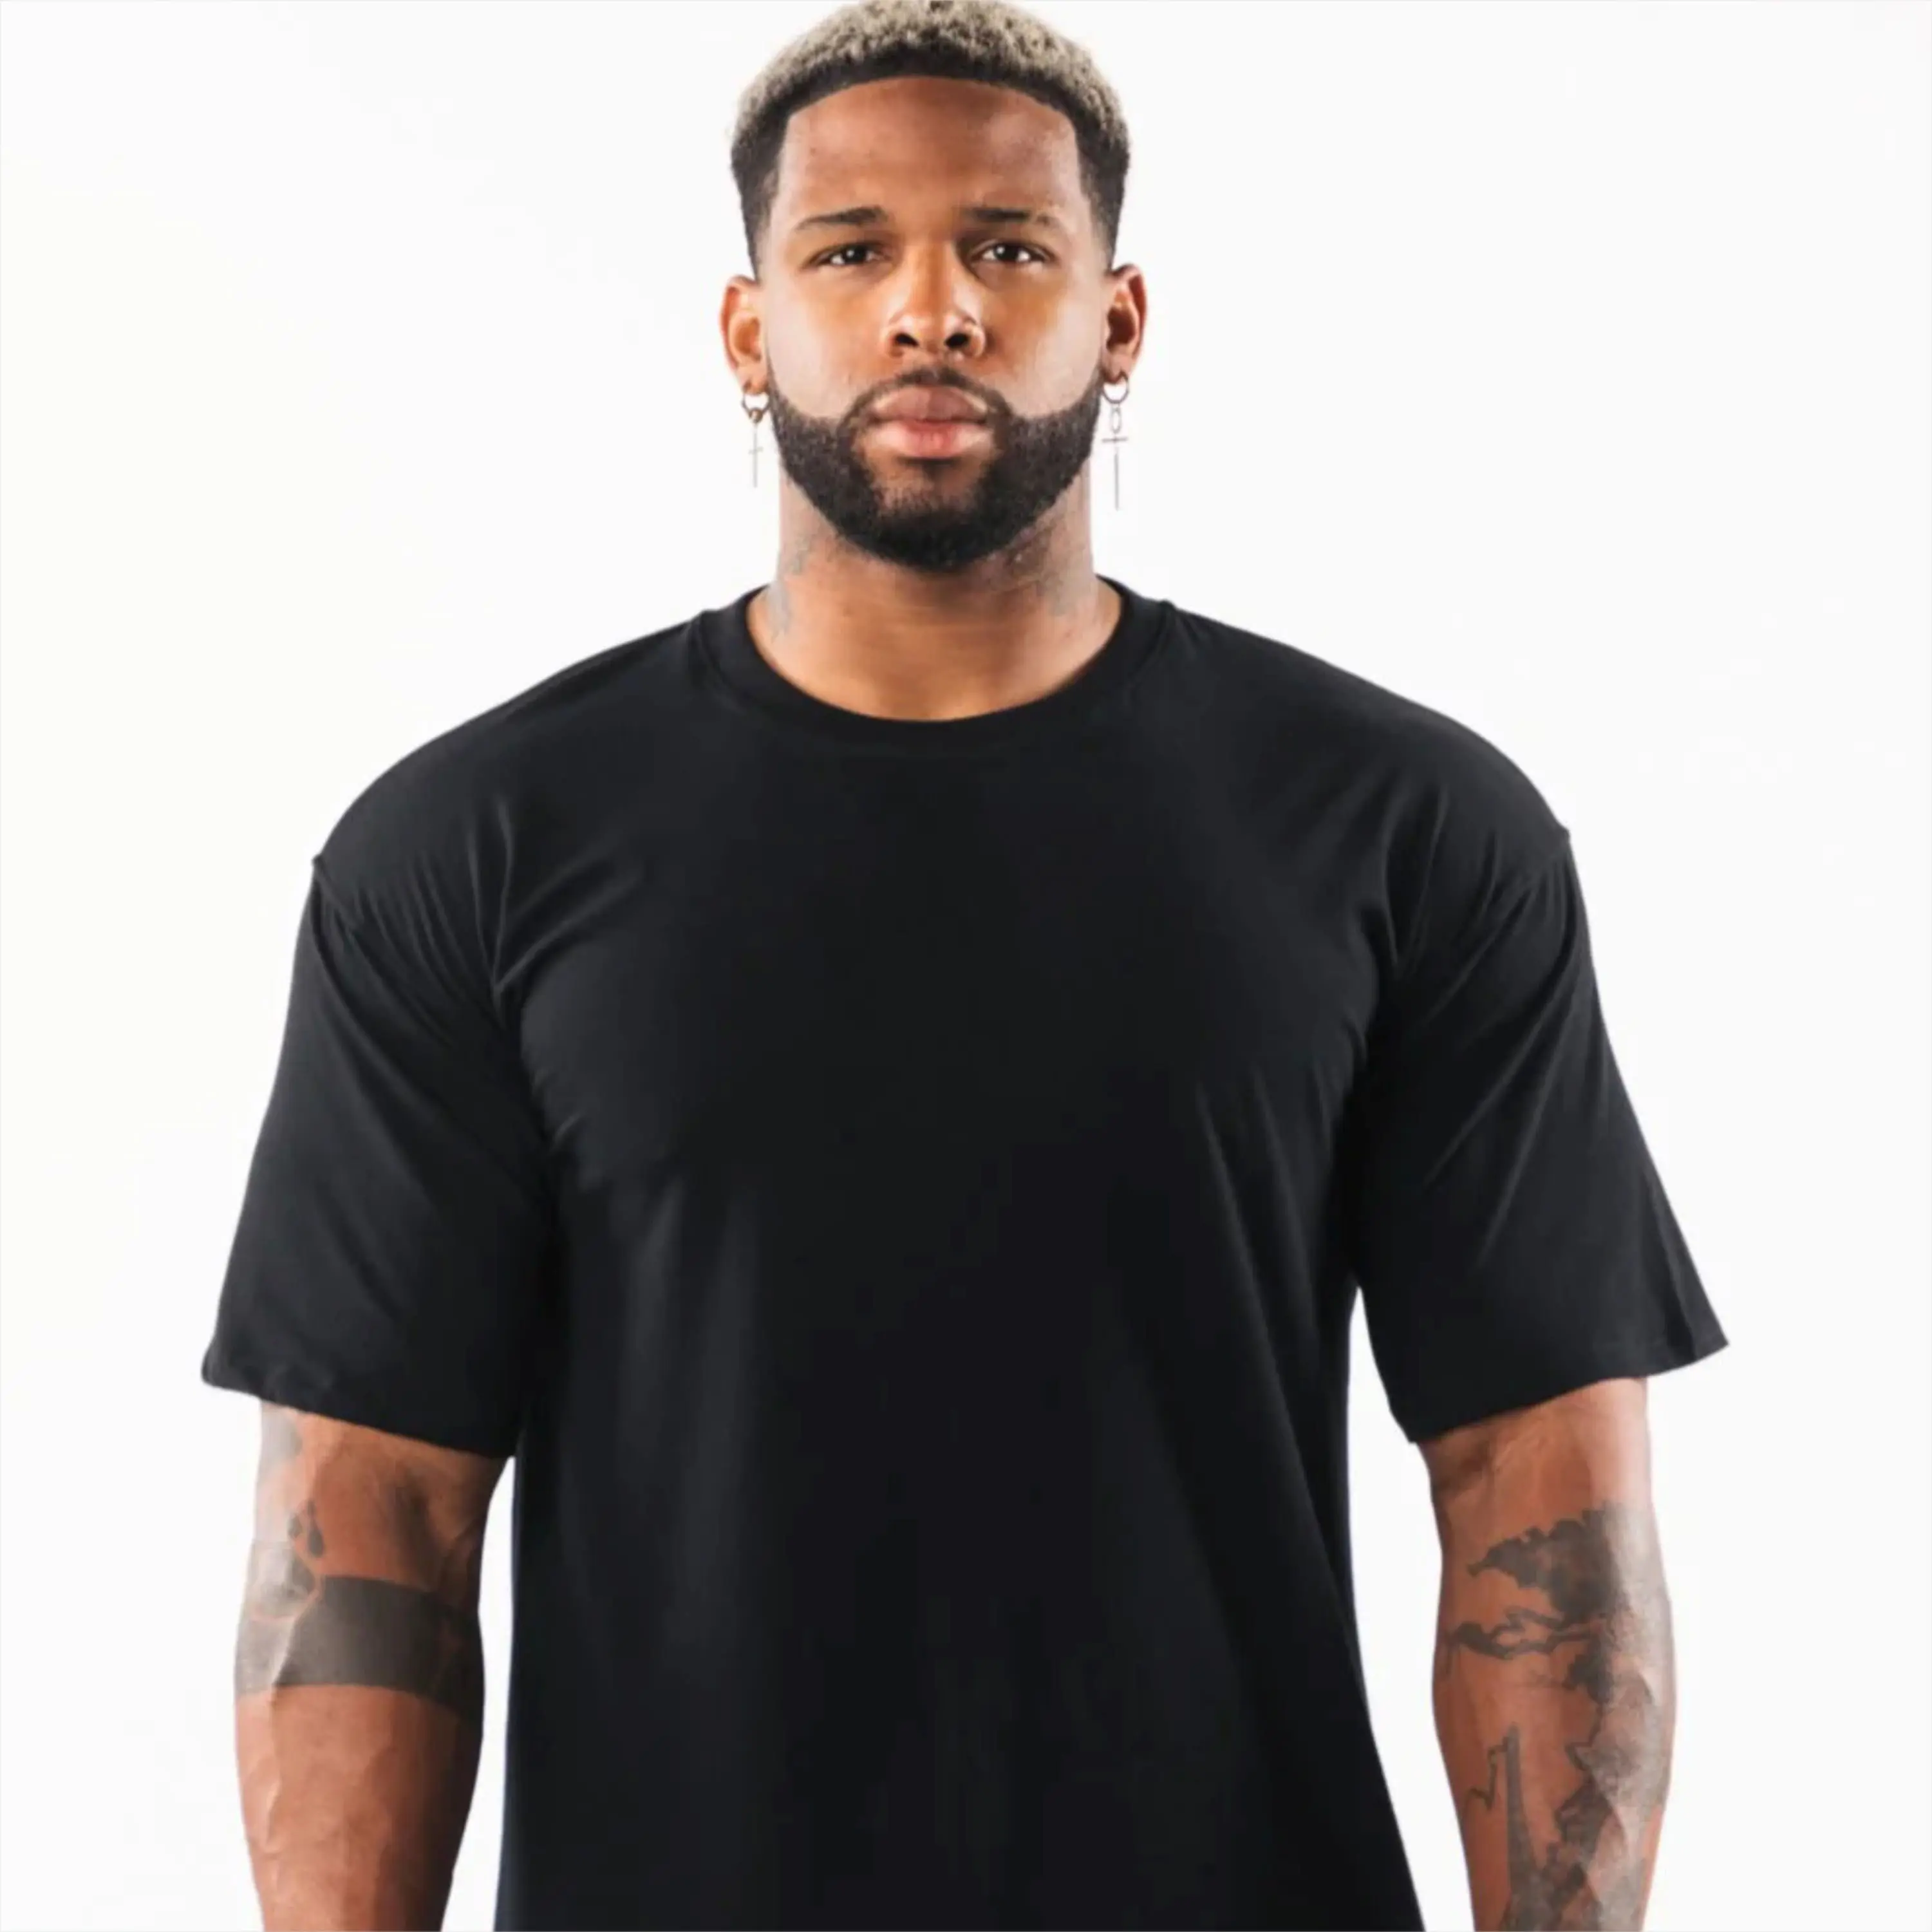 Toptan özel Manufectuer T Shirt kısa kollu erkek T Shirt spor spor atletik koşu giyim t-shirt